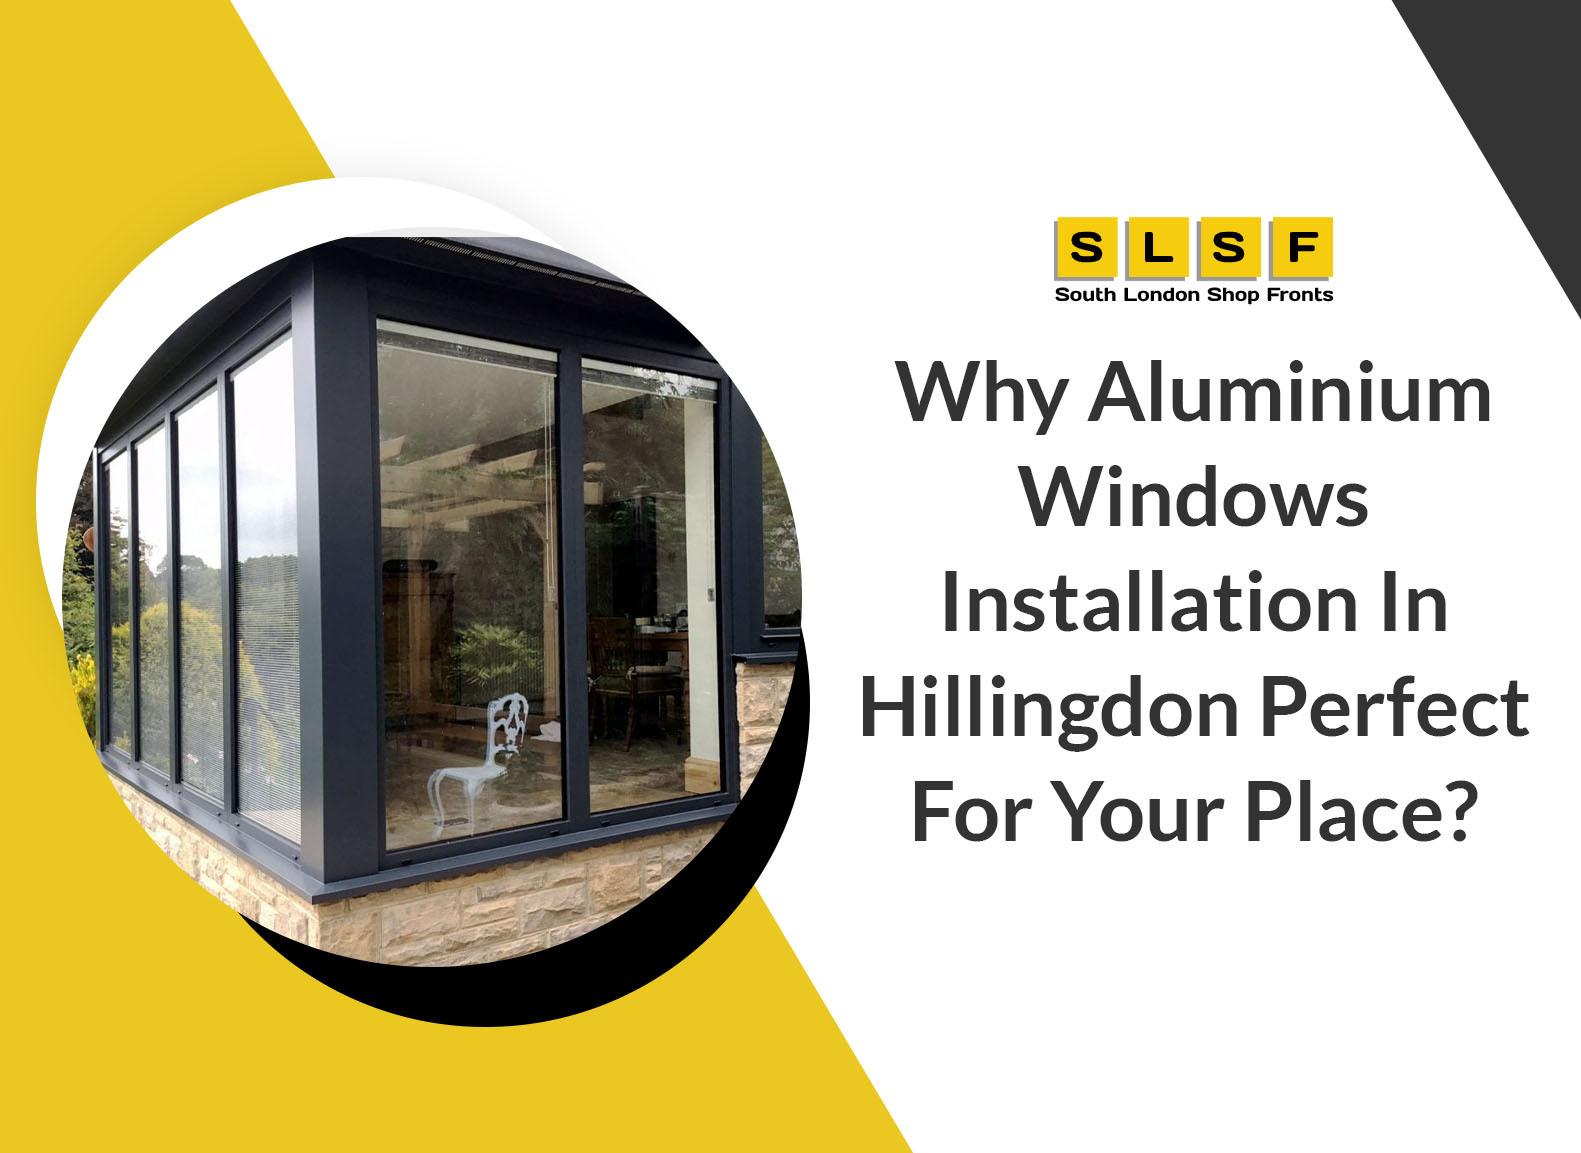 Aluminium Windows Installation In Hillingdon